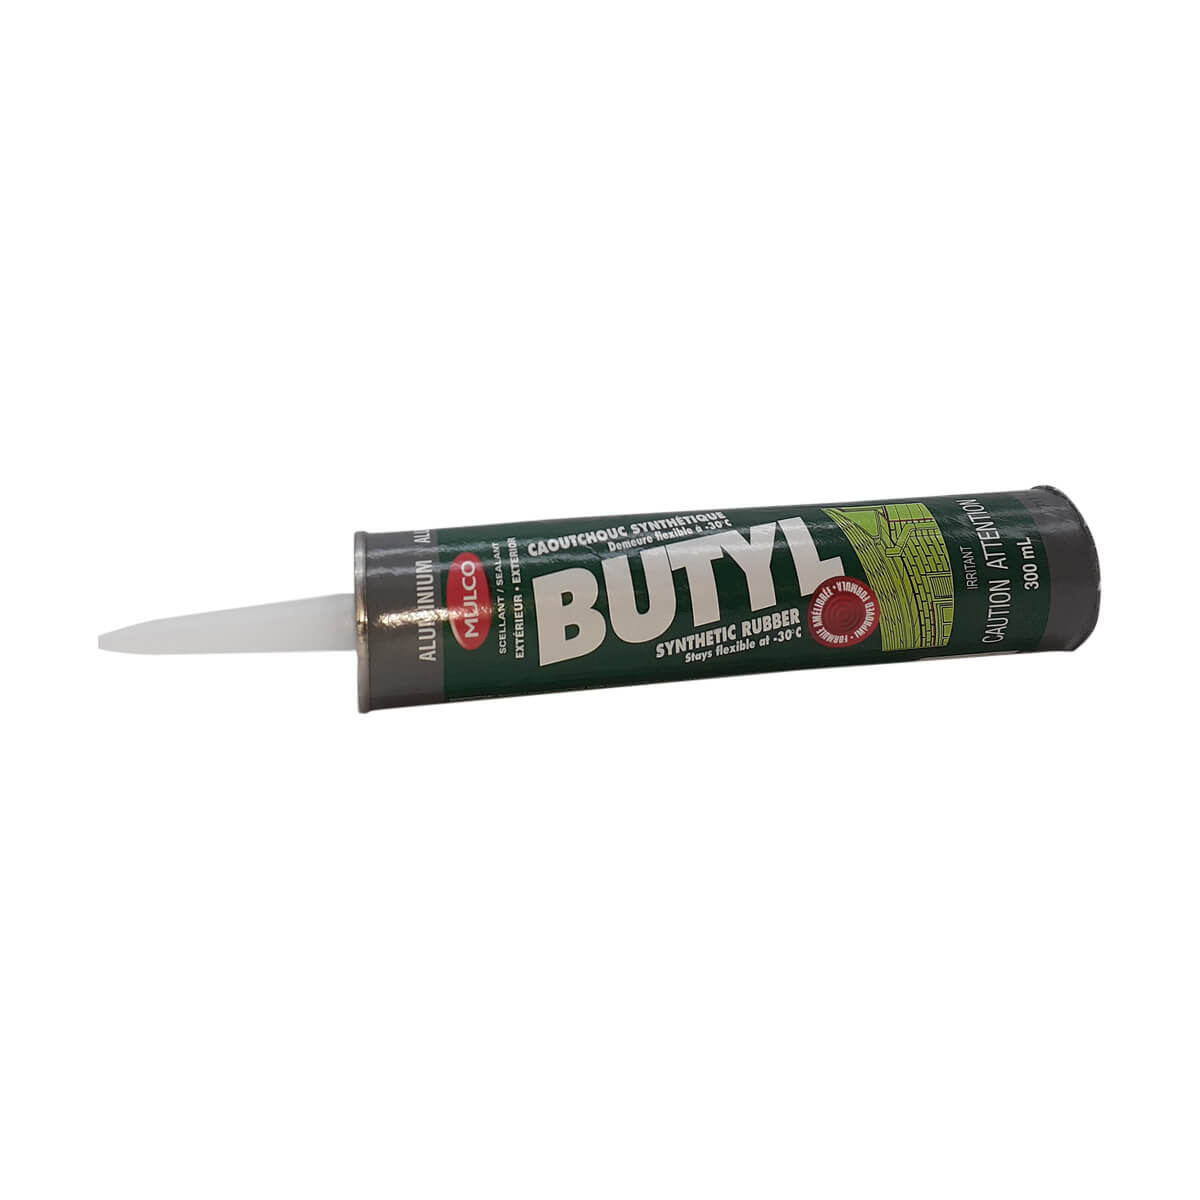 Butyl - Aluminum - 300 ml